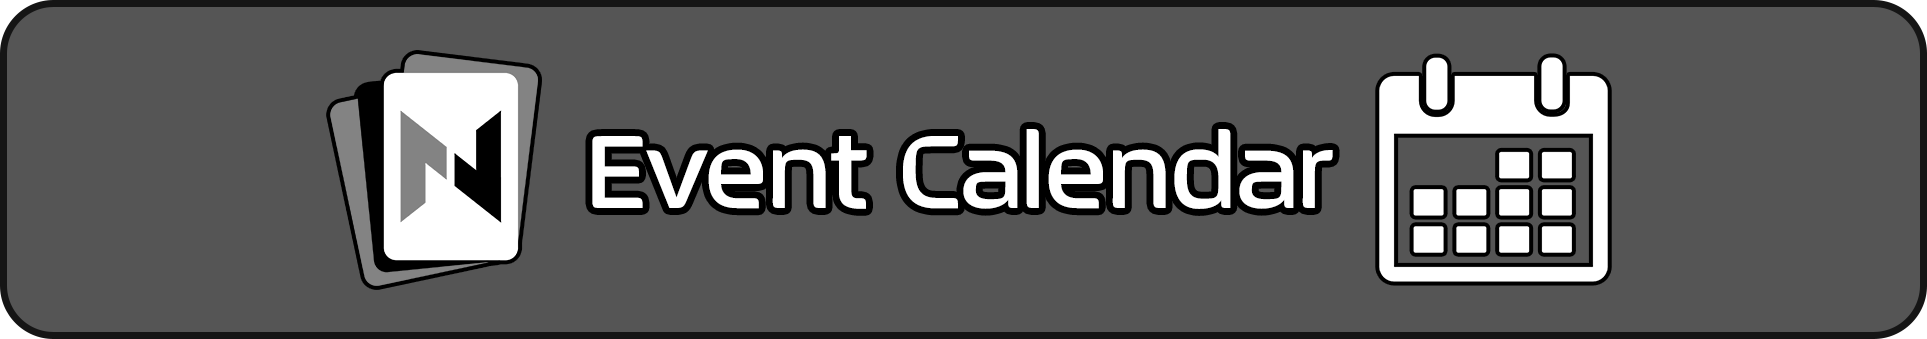 central coast trading card game event calendar 